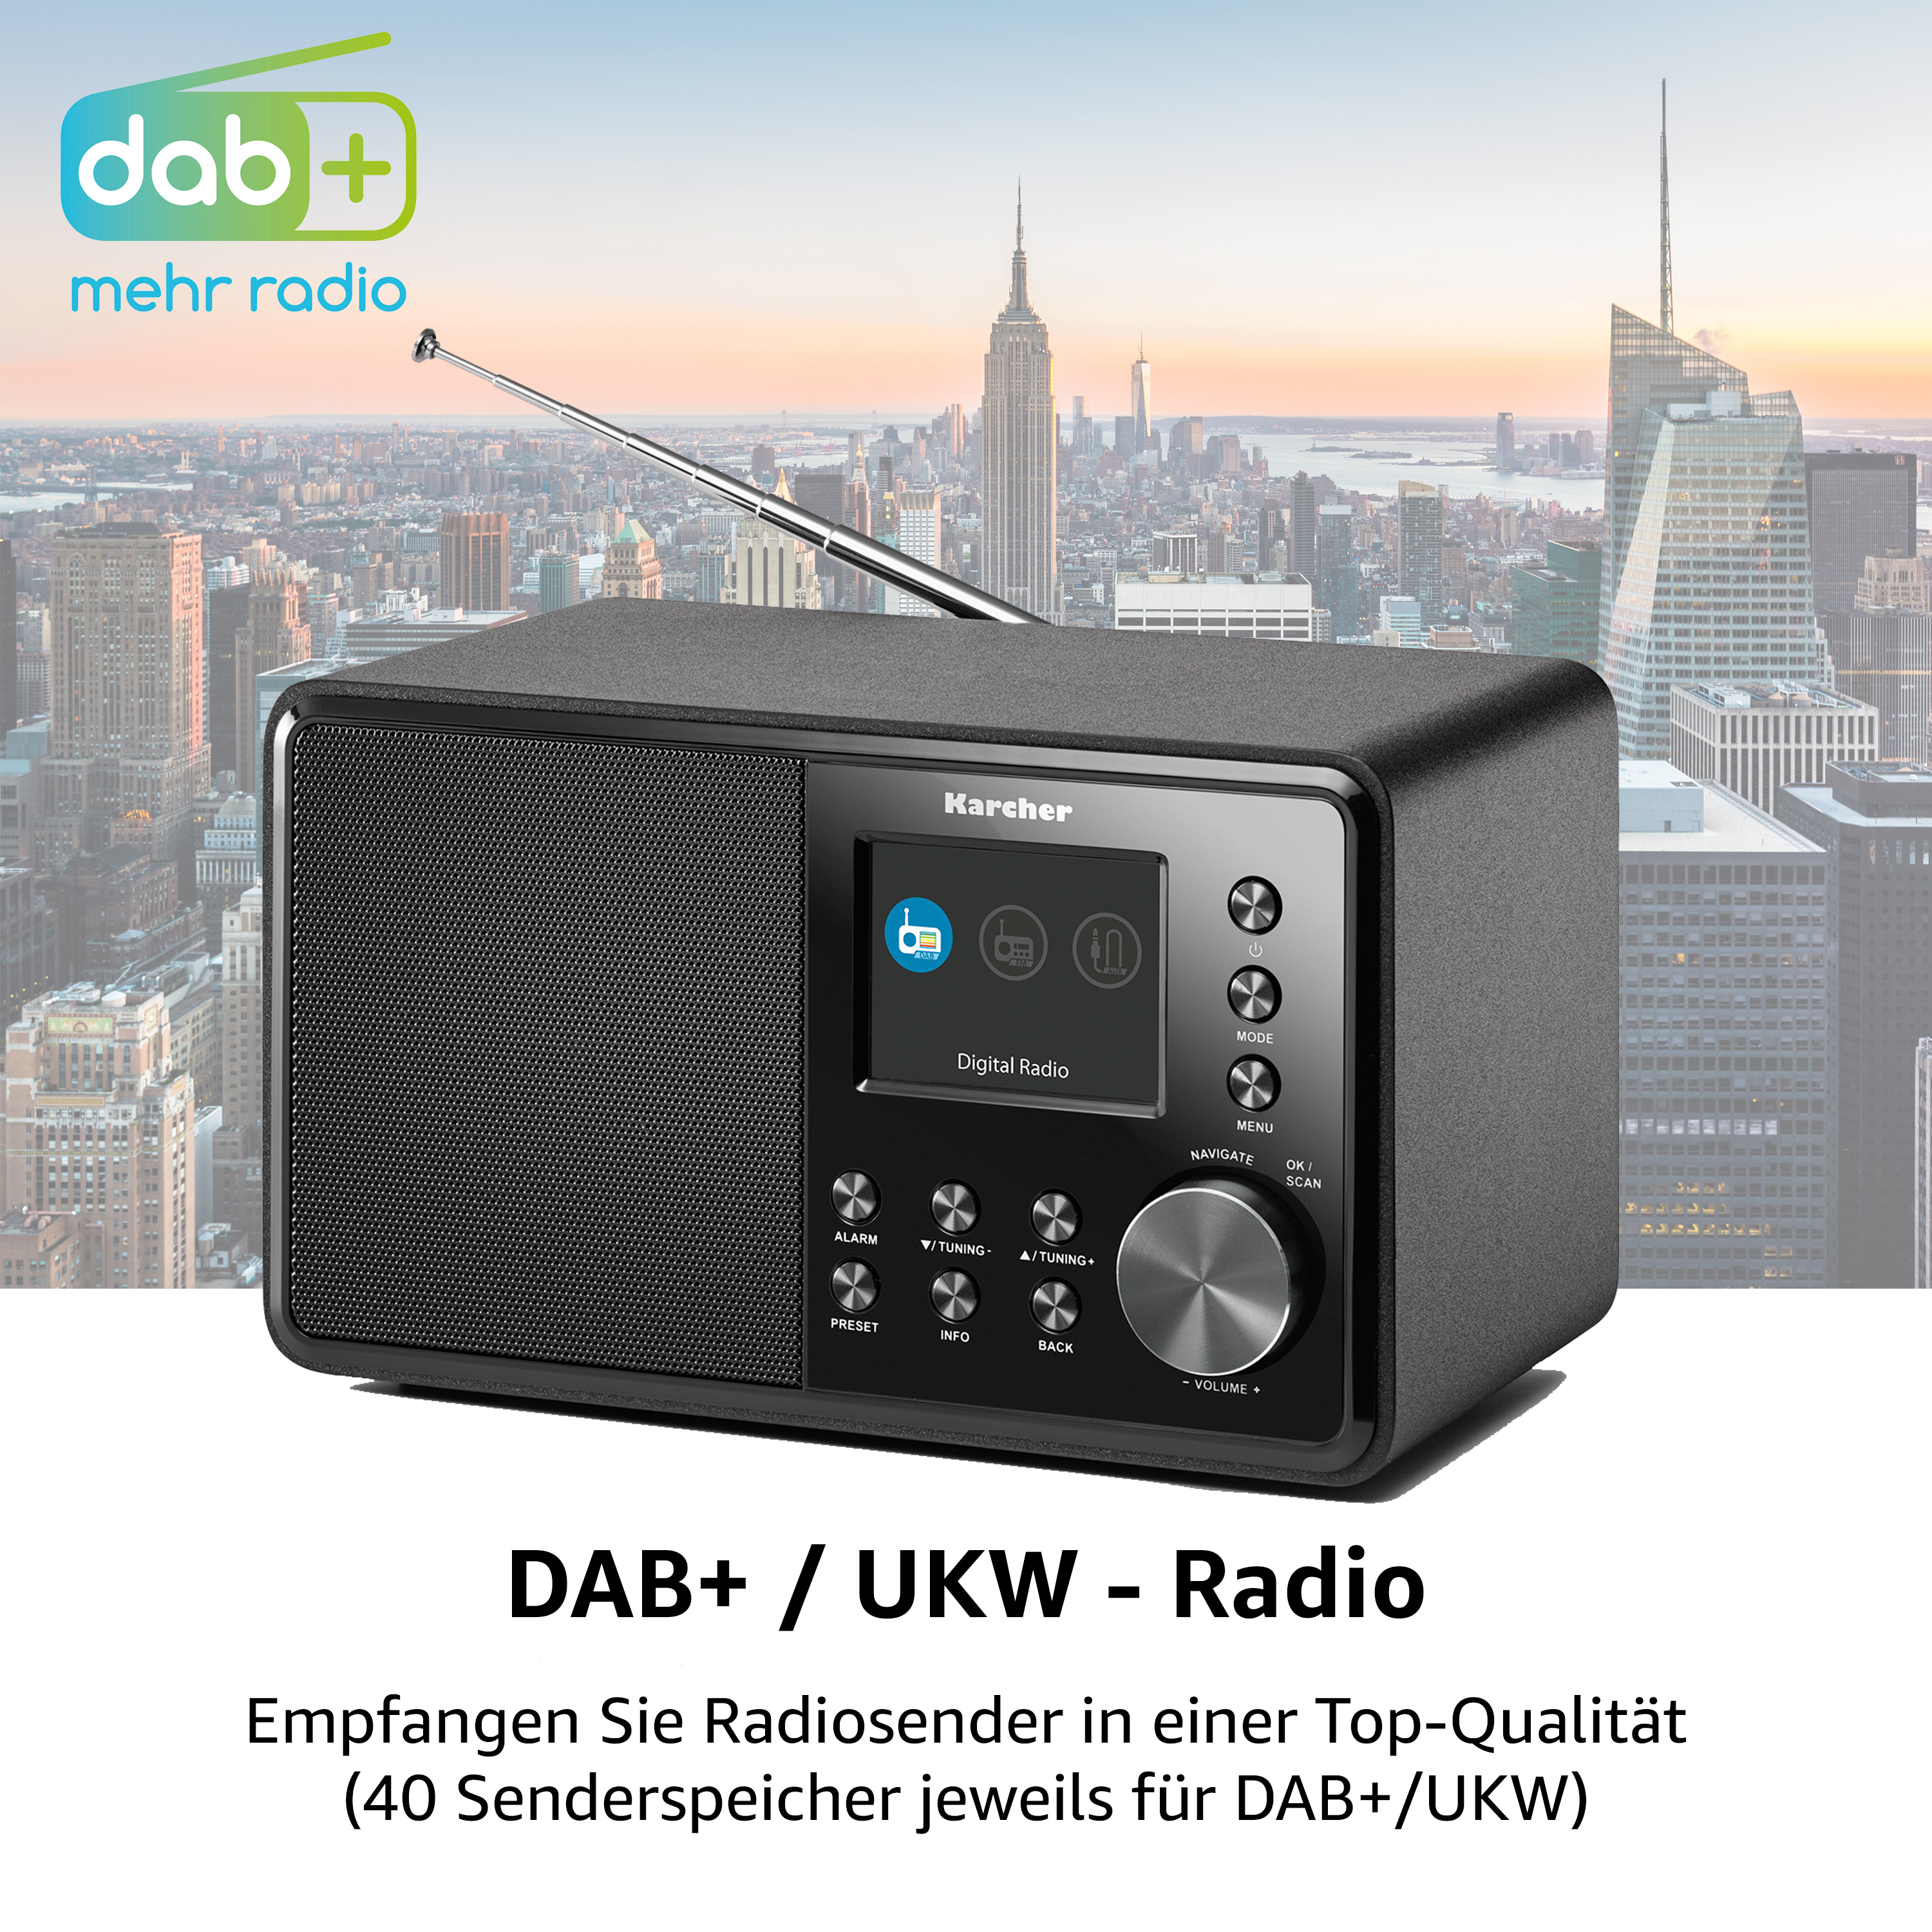 FM, 3000 DAB DAB+, Radio, Schwarz DAB+, KARCHER DAB+